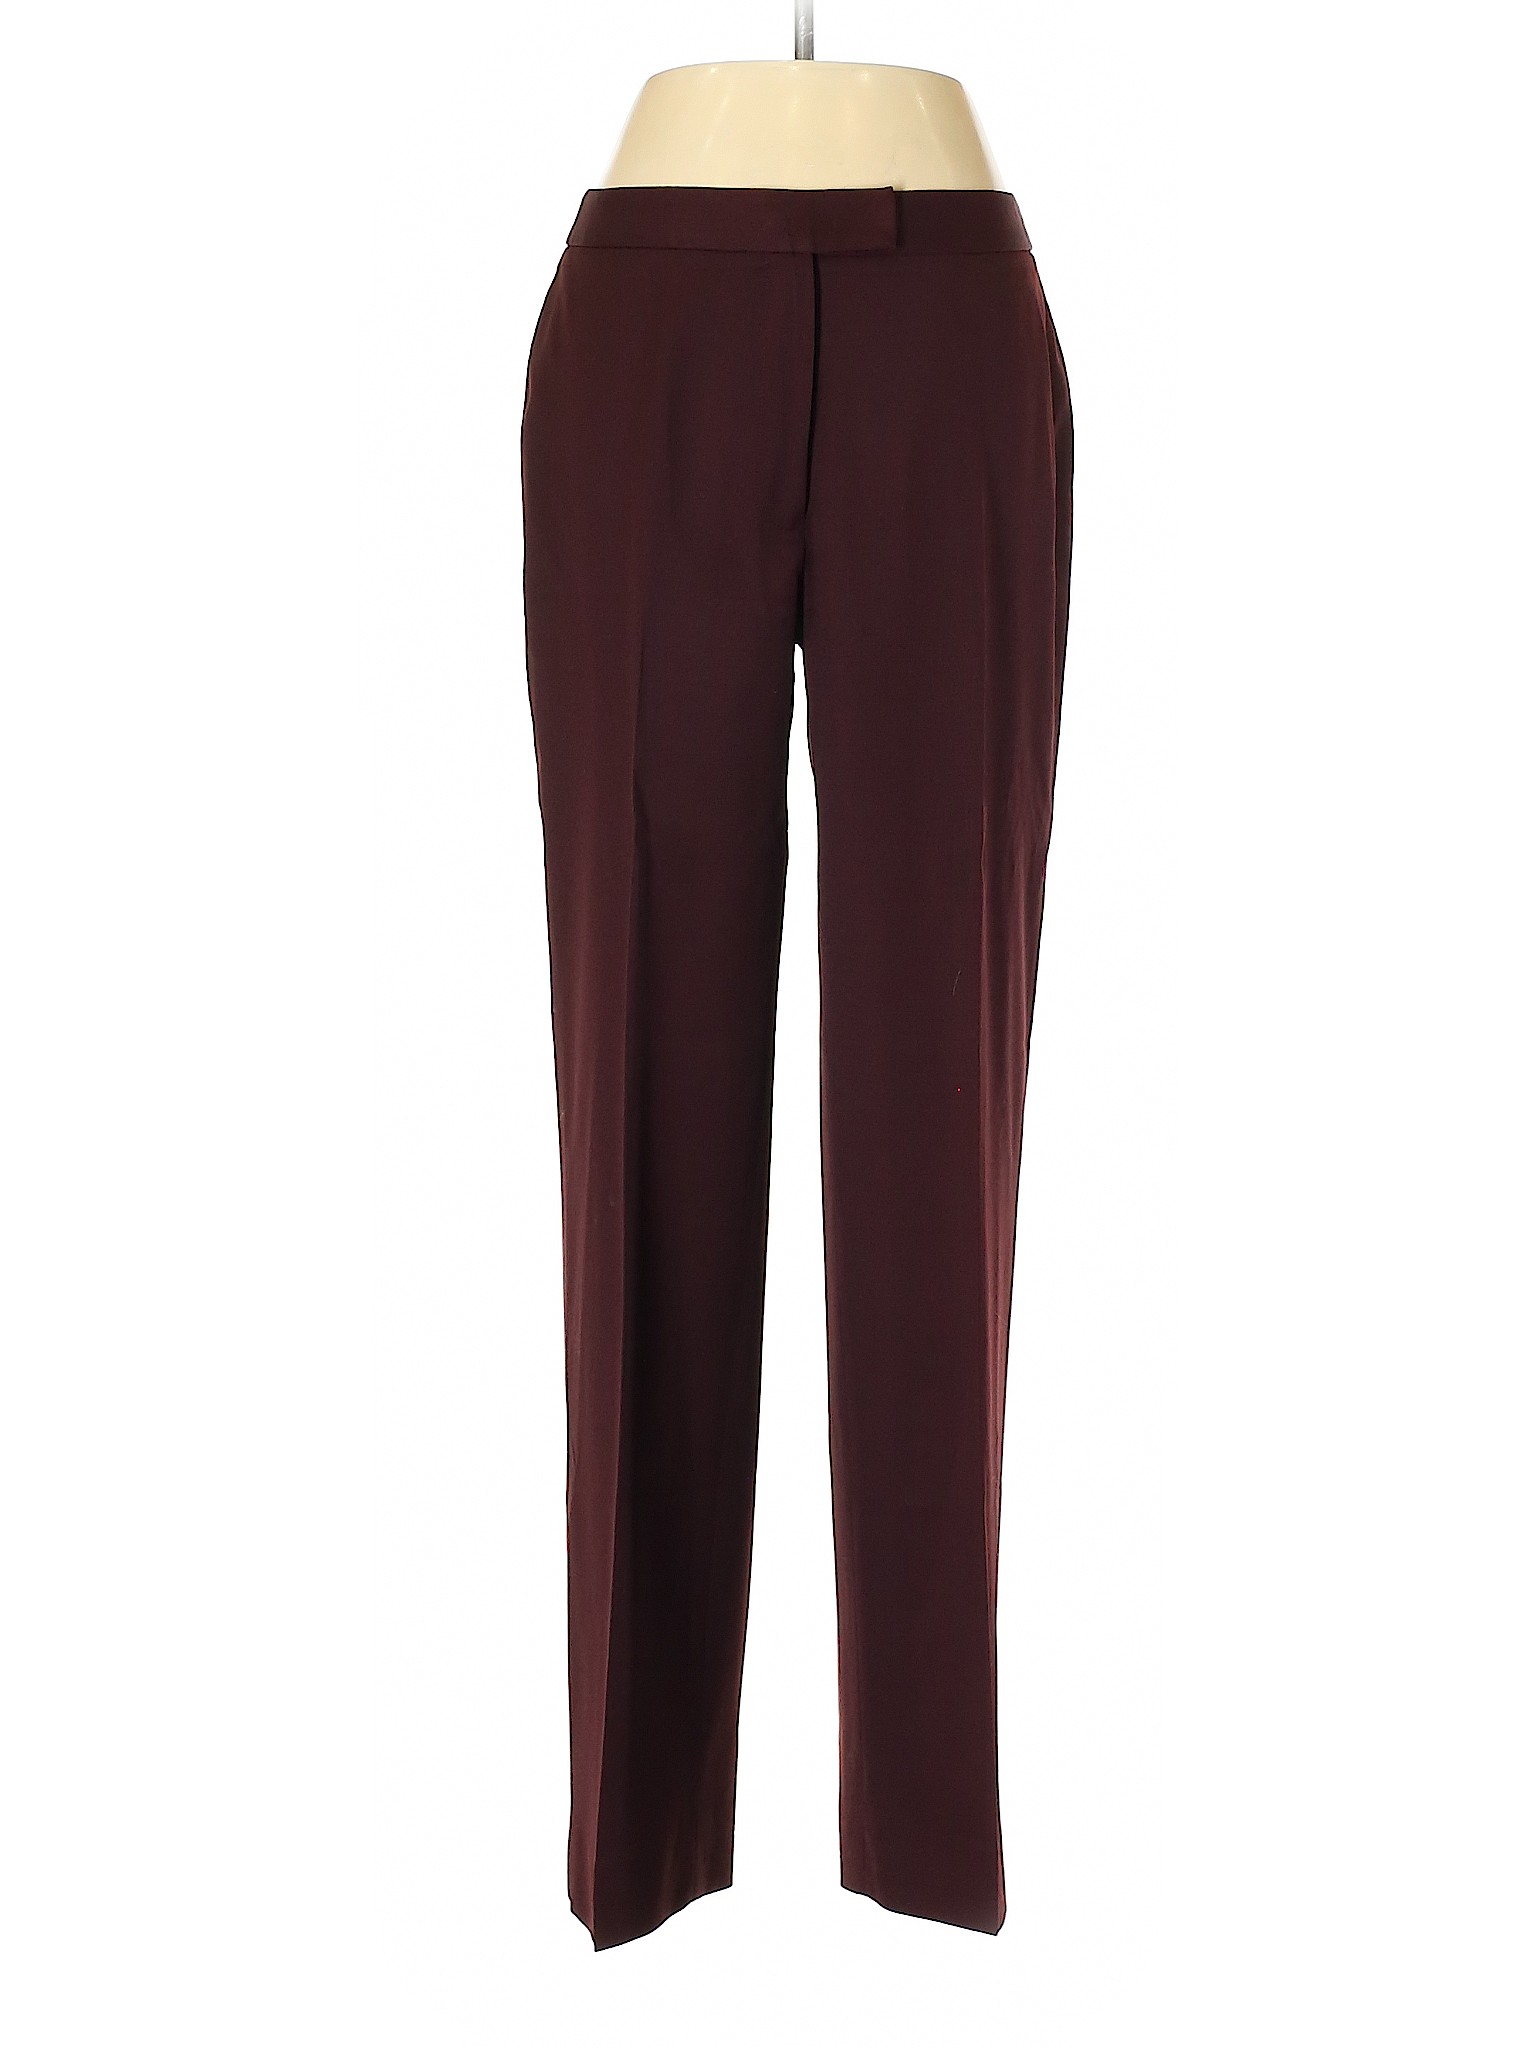 INC International Concepts Women Red Wool Pants 6 | eBay